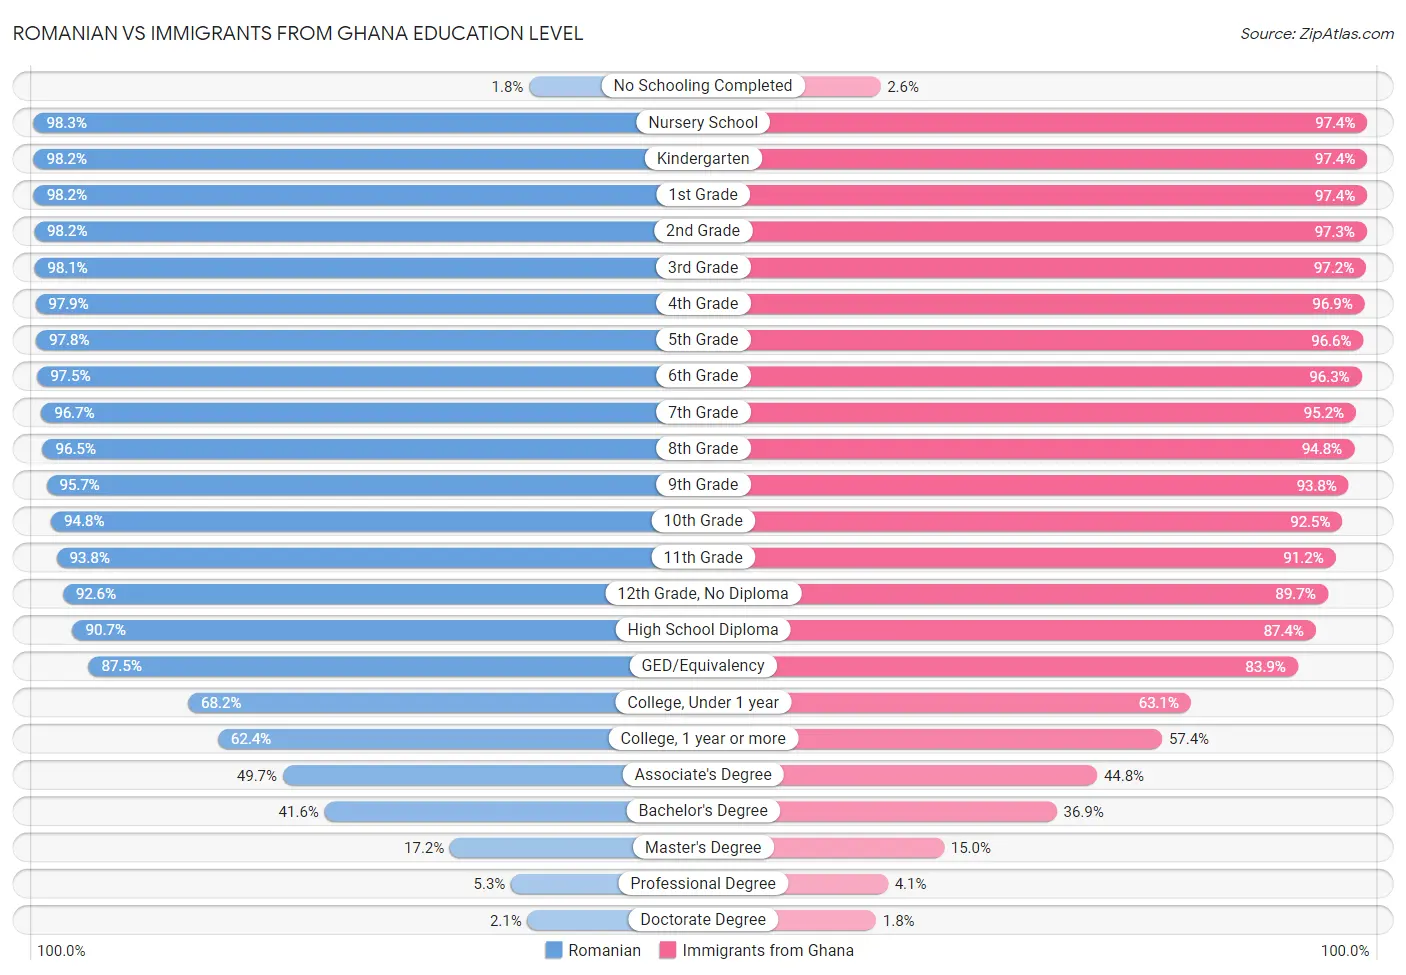 Romanian vs Immigrants from Ghana Education Level